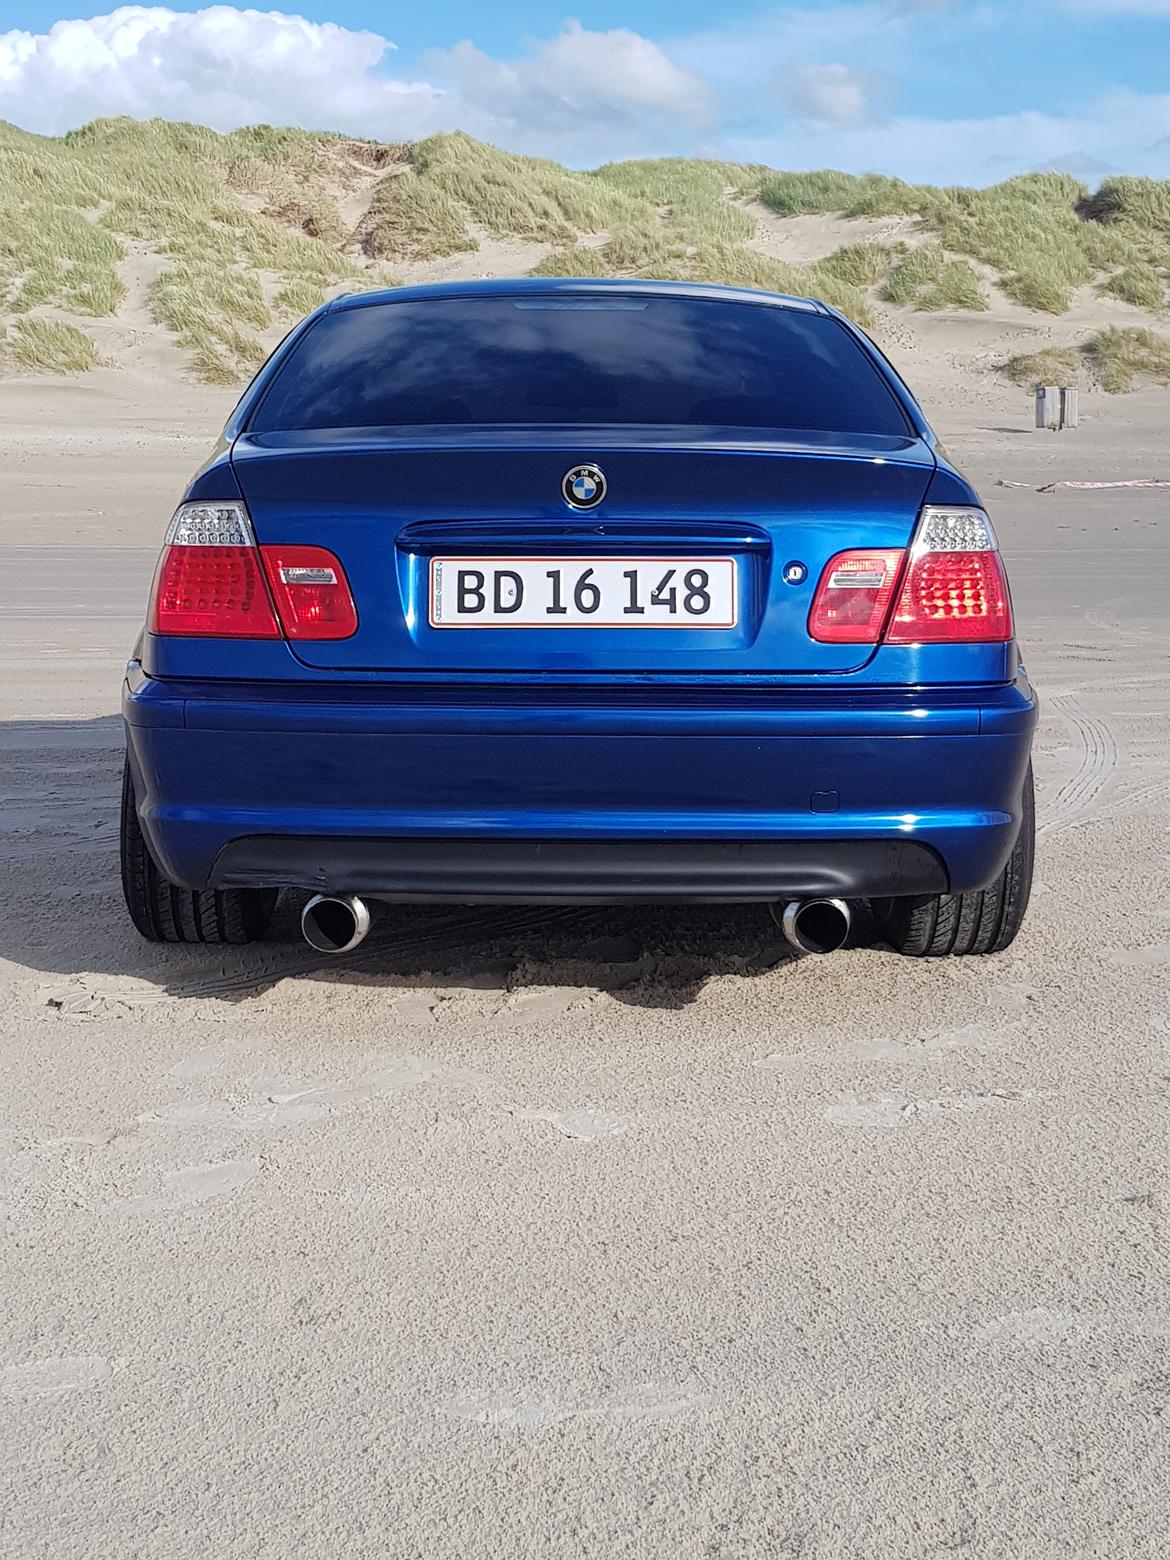 BMW E46 billede 27